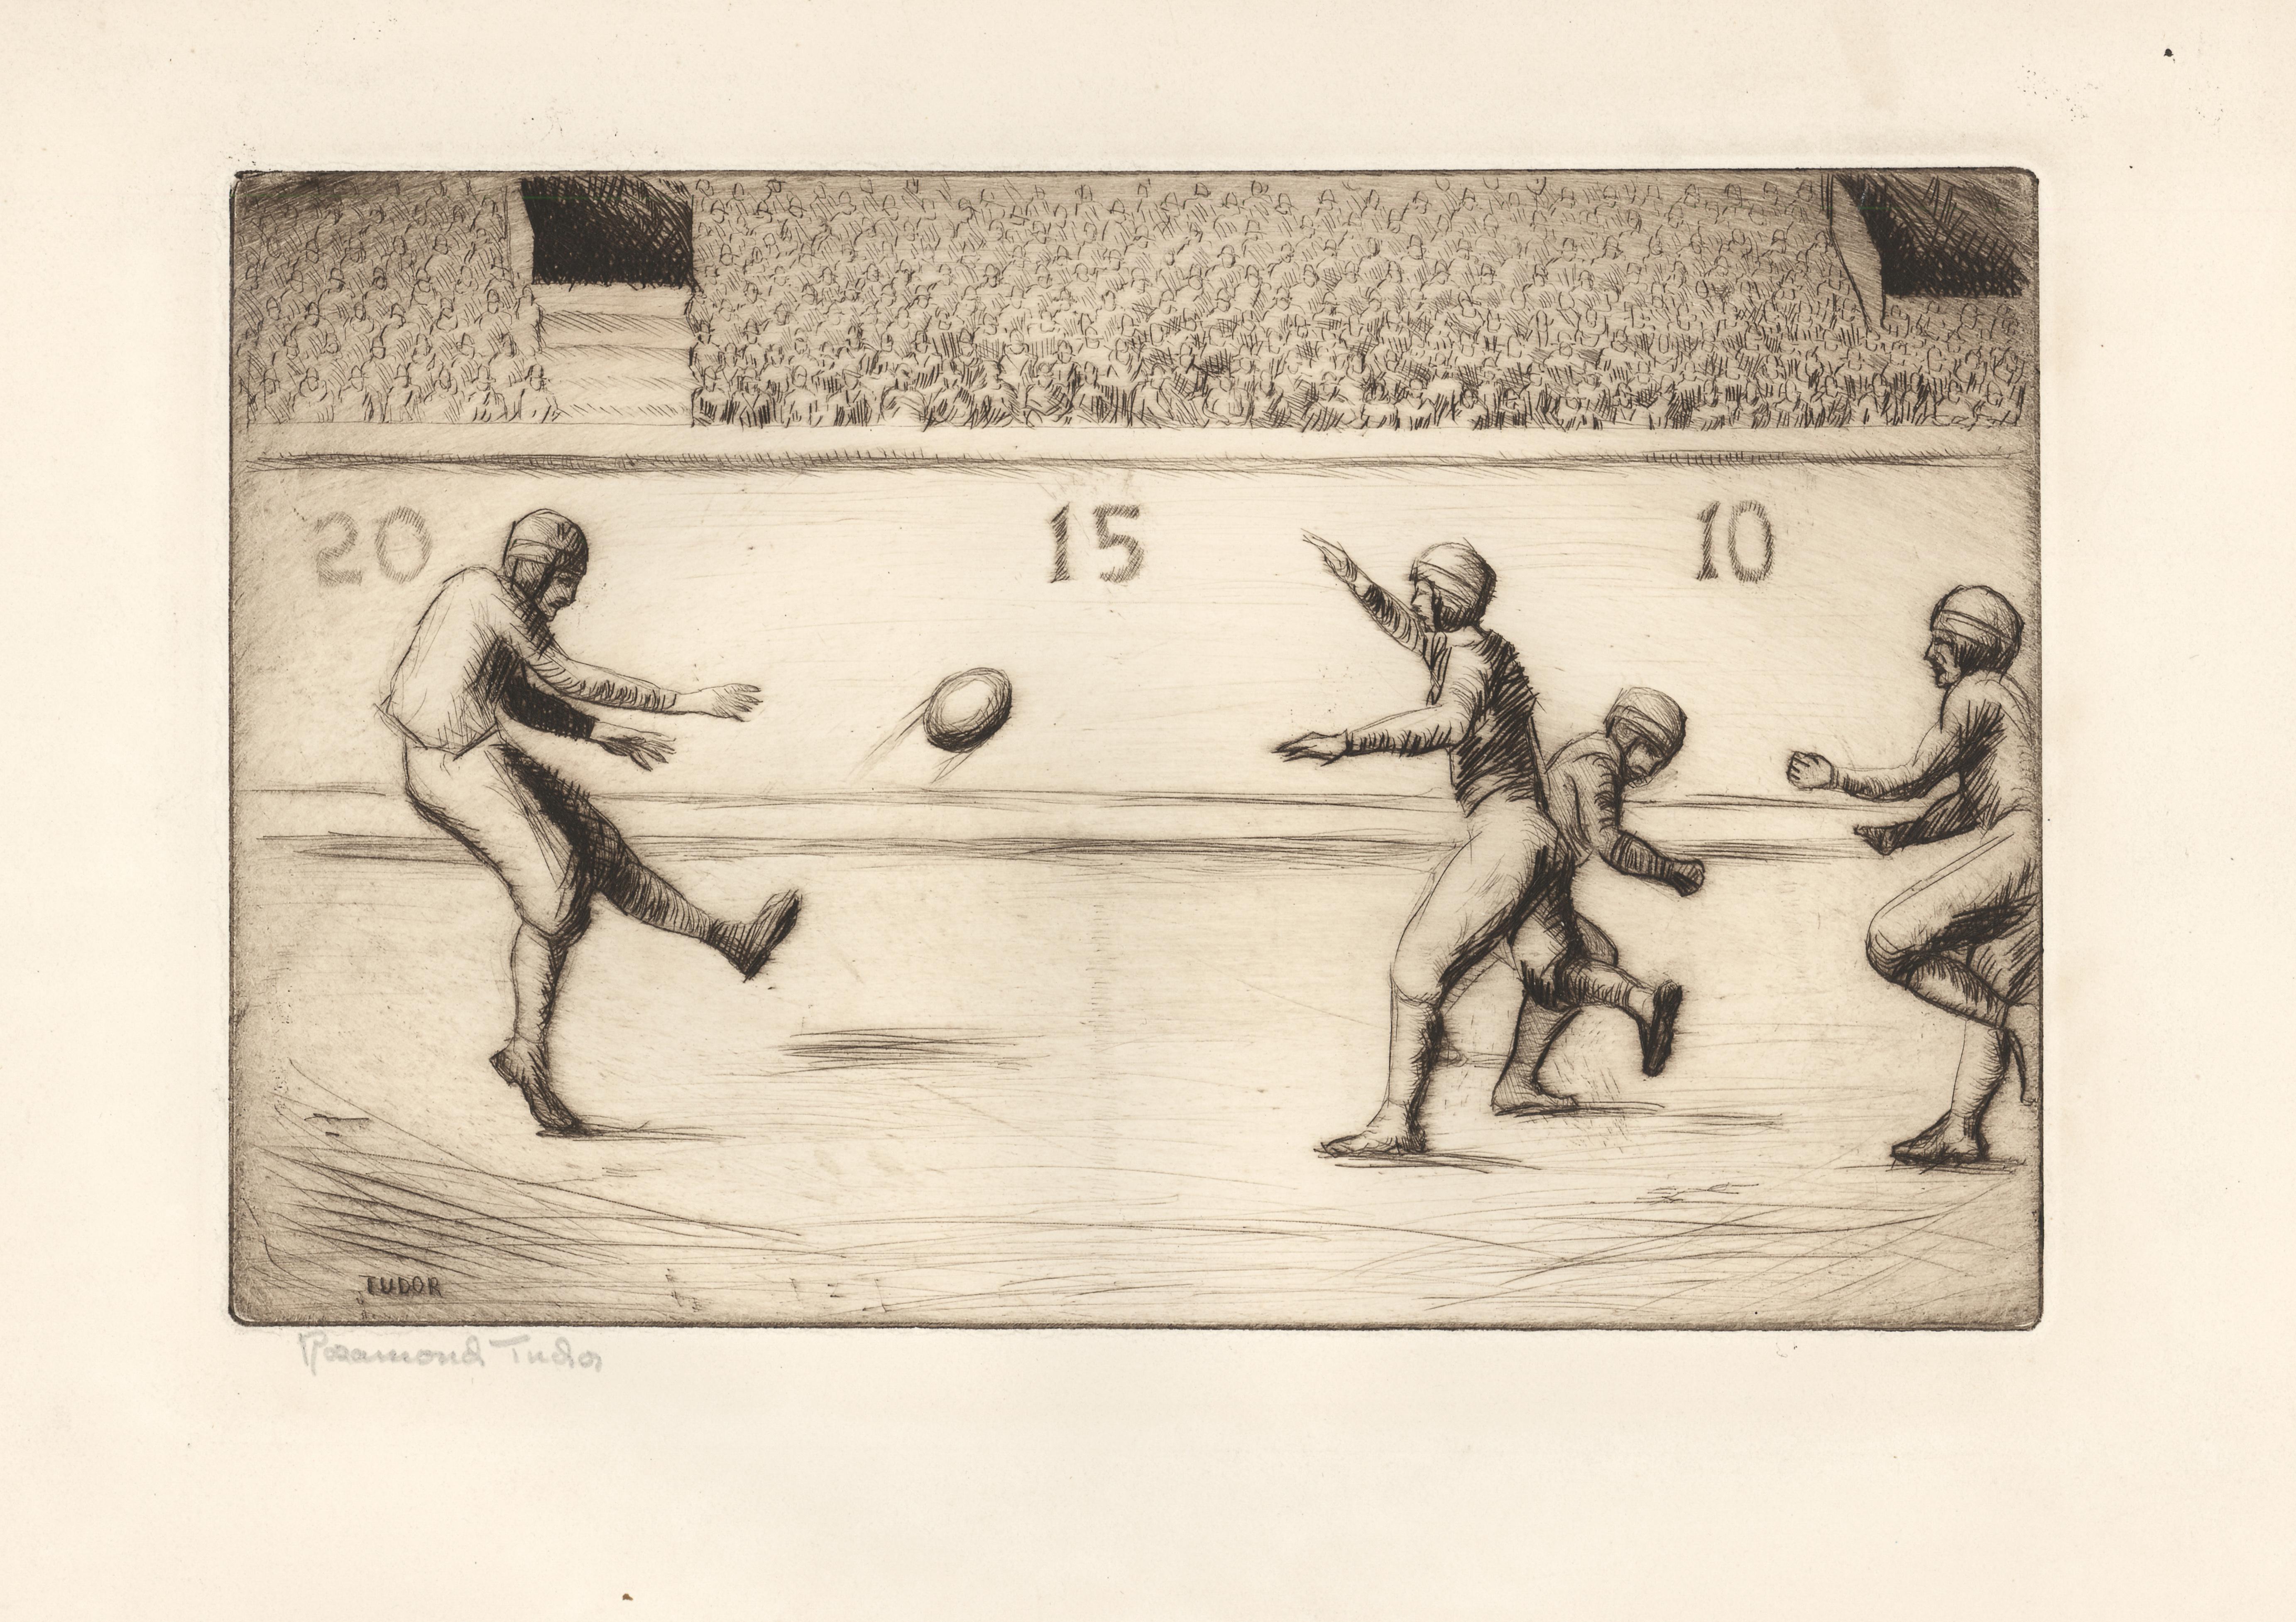 Rosamond Tudor Figurative Print - "The Punt" Football Etching